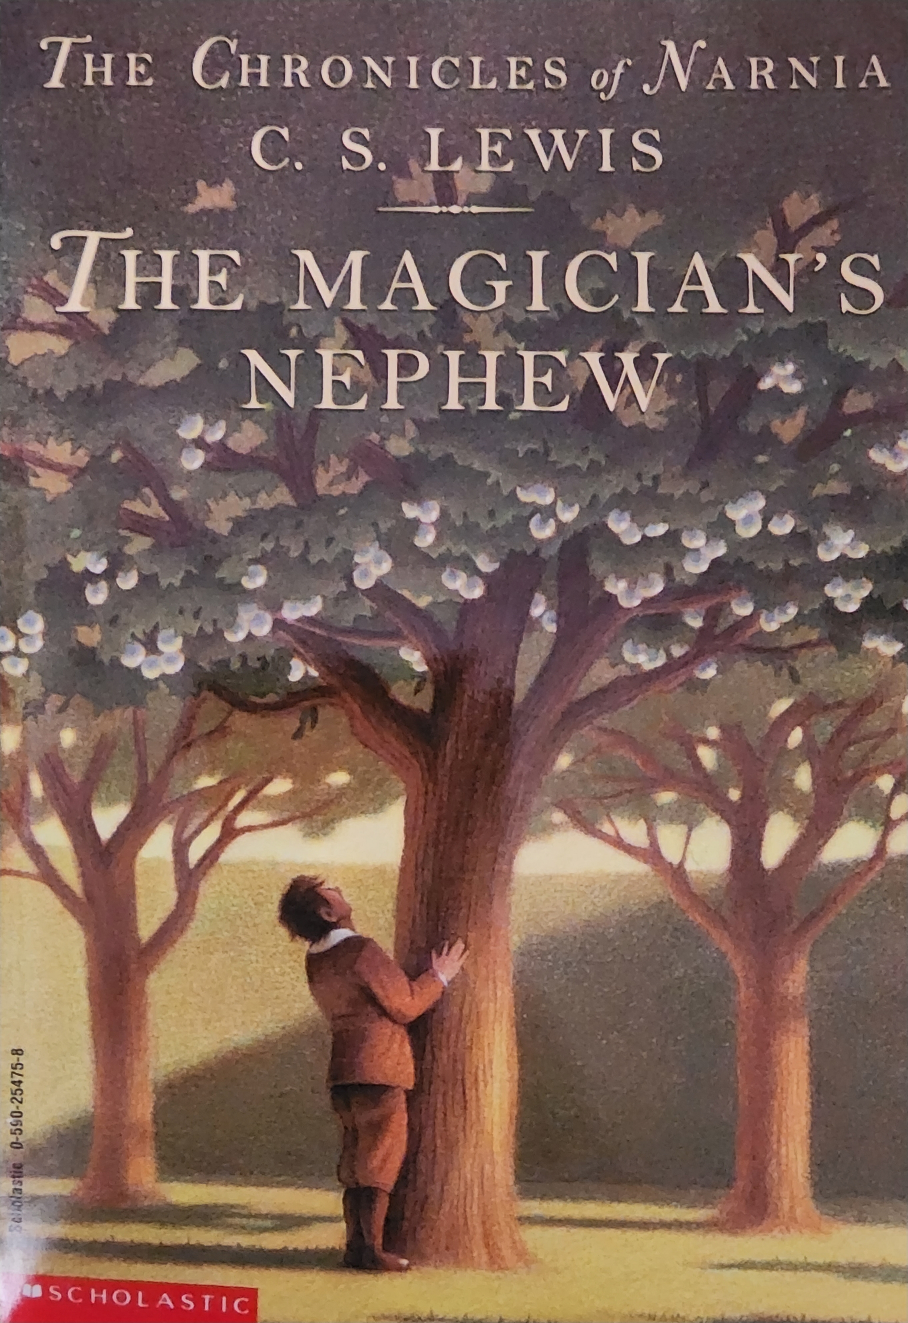 C. S. Lewis: the Magician's Nephew (1955, HarperCollins Publishers,Inc)